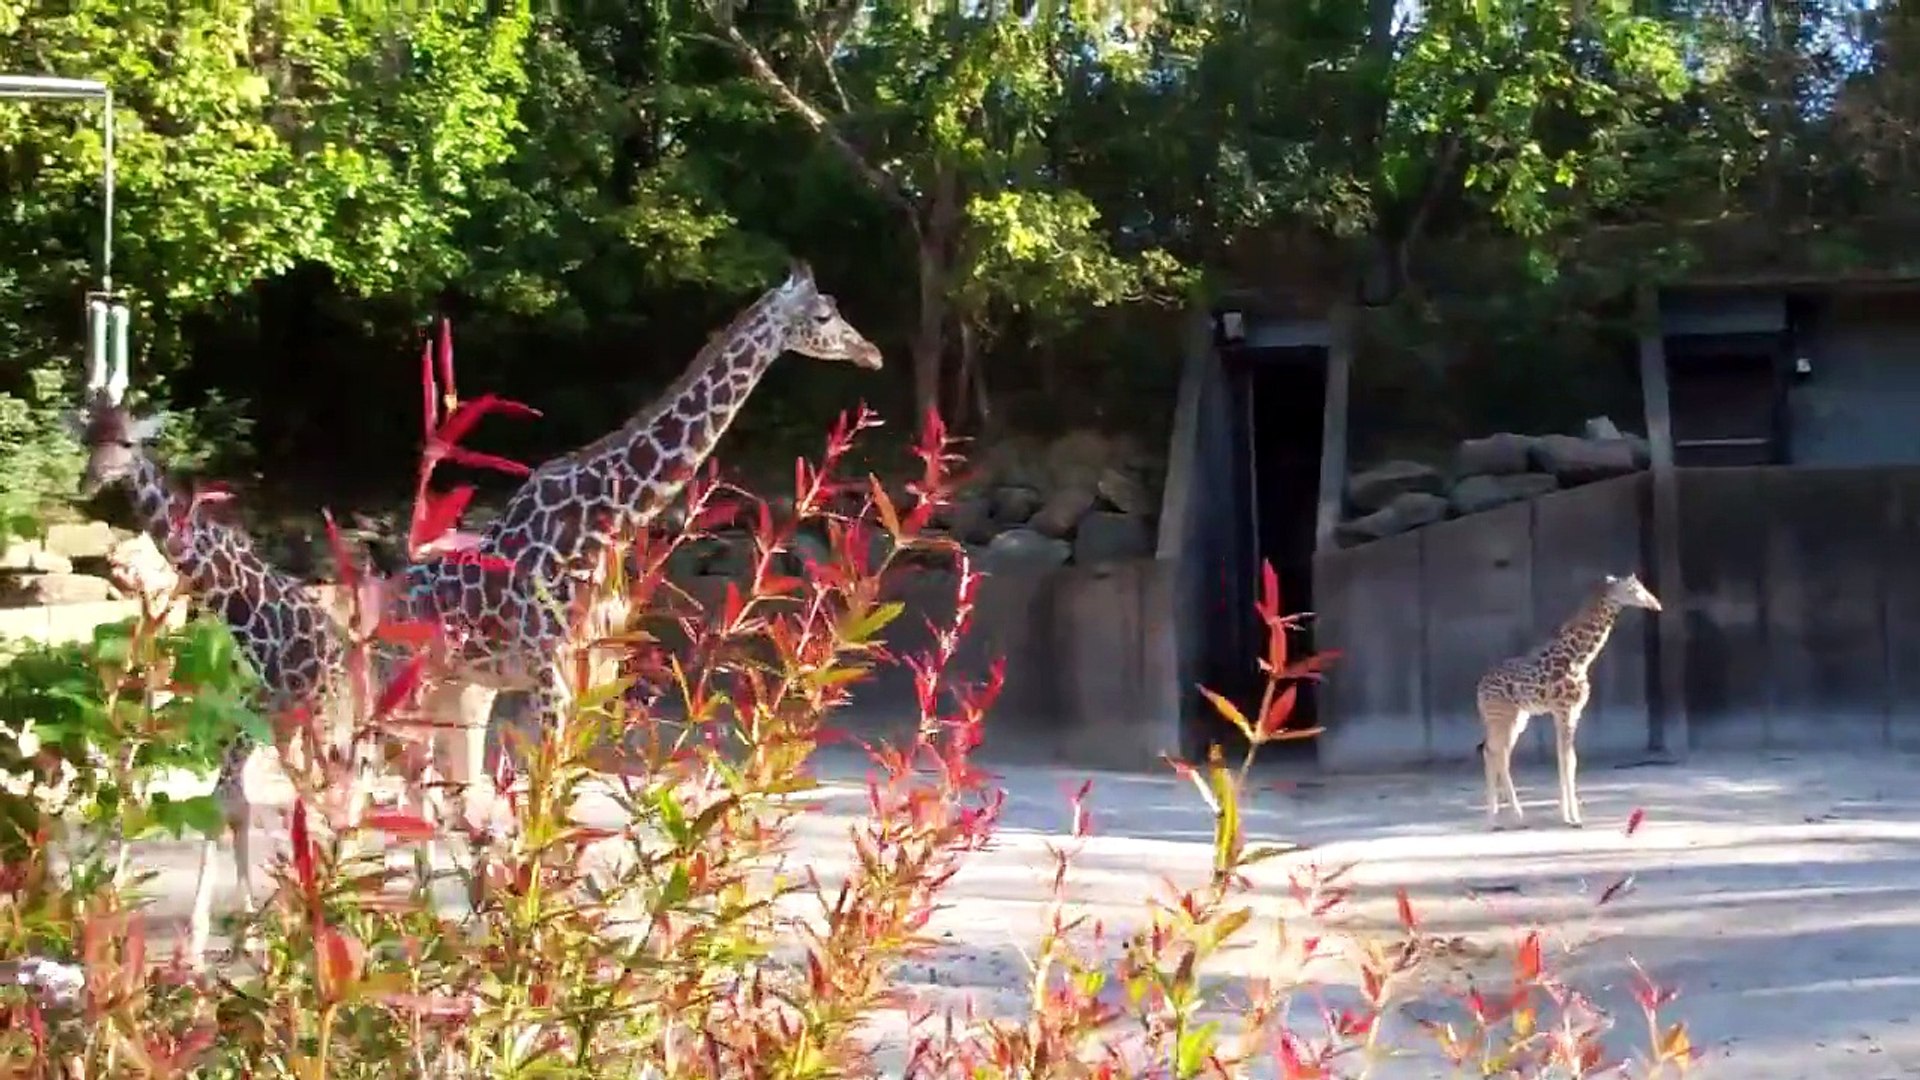 Giraffes at the Memphis Zoo